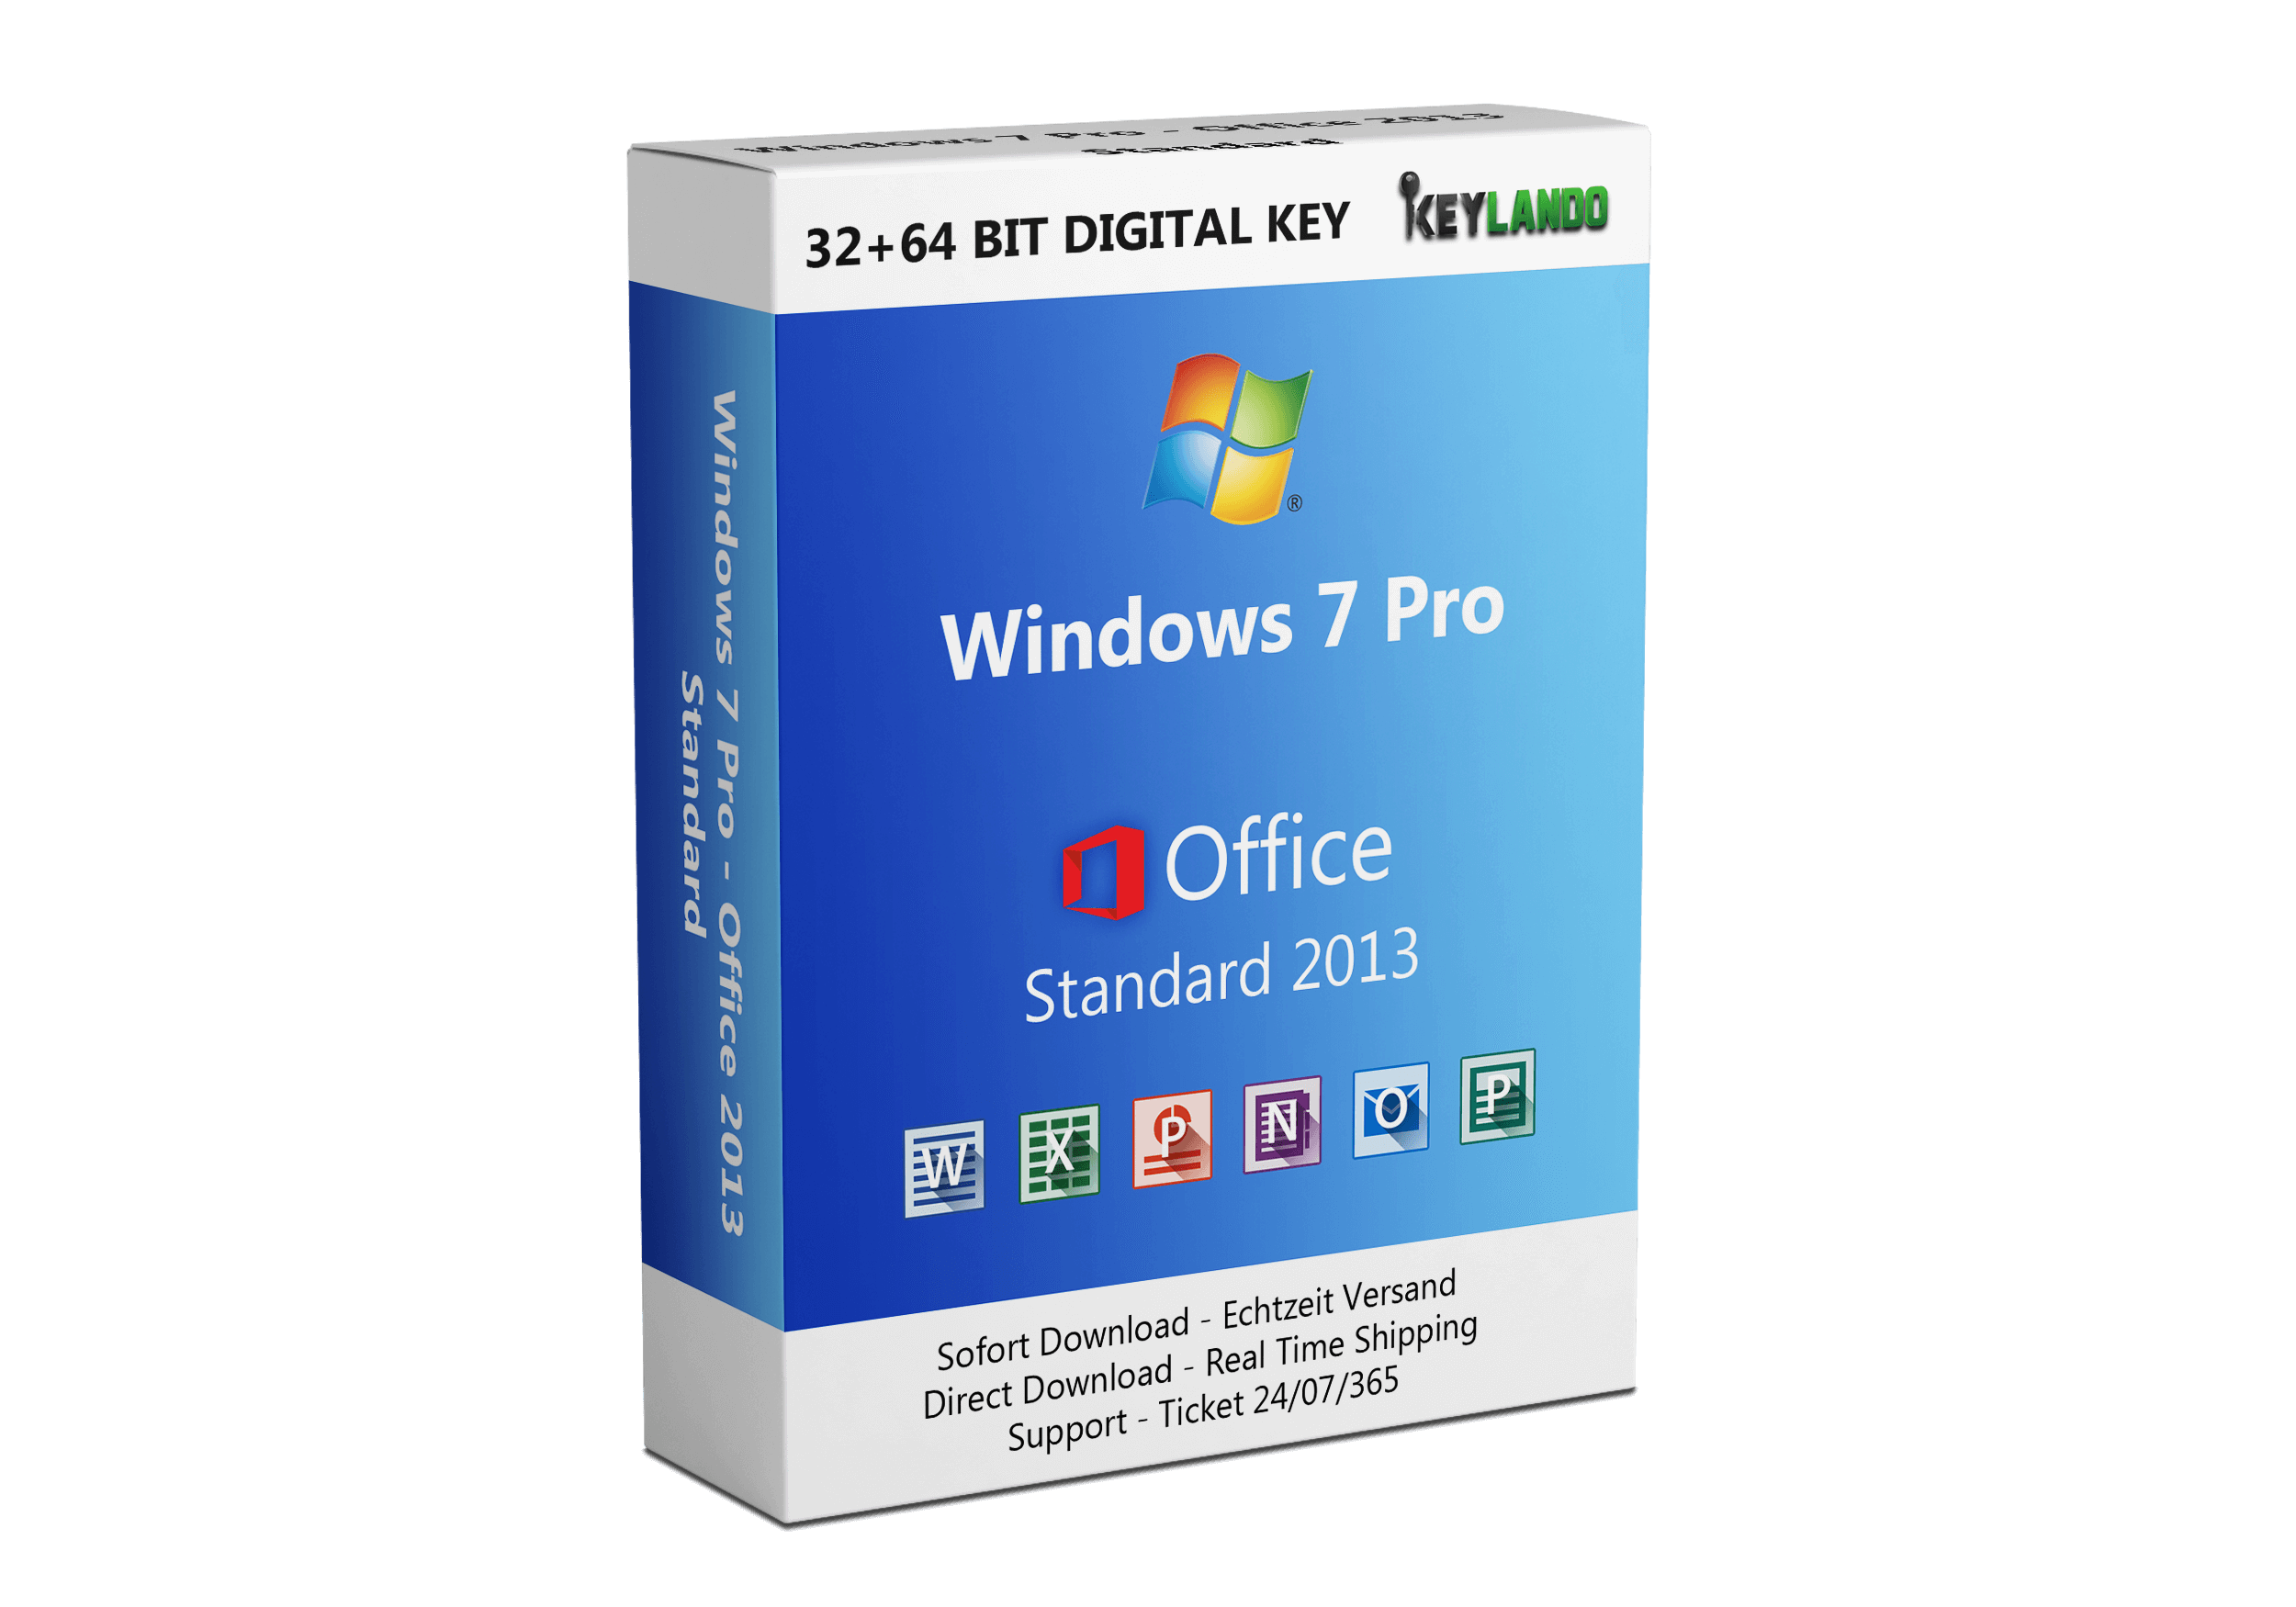 Windows 7 Pro + Office 2013 Standard